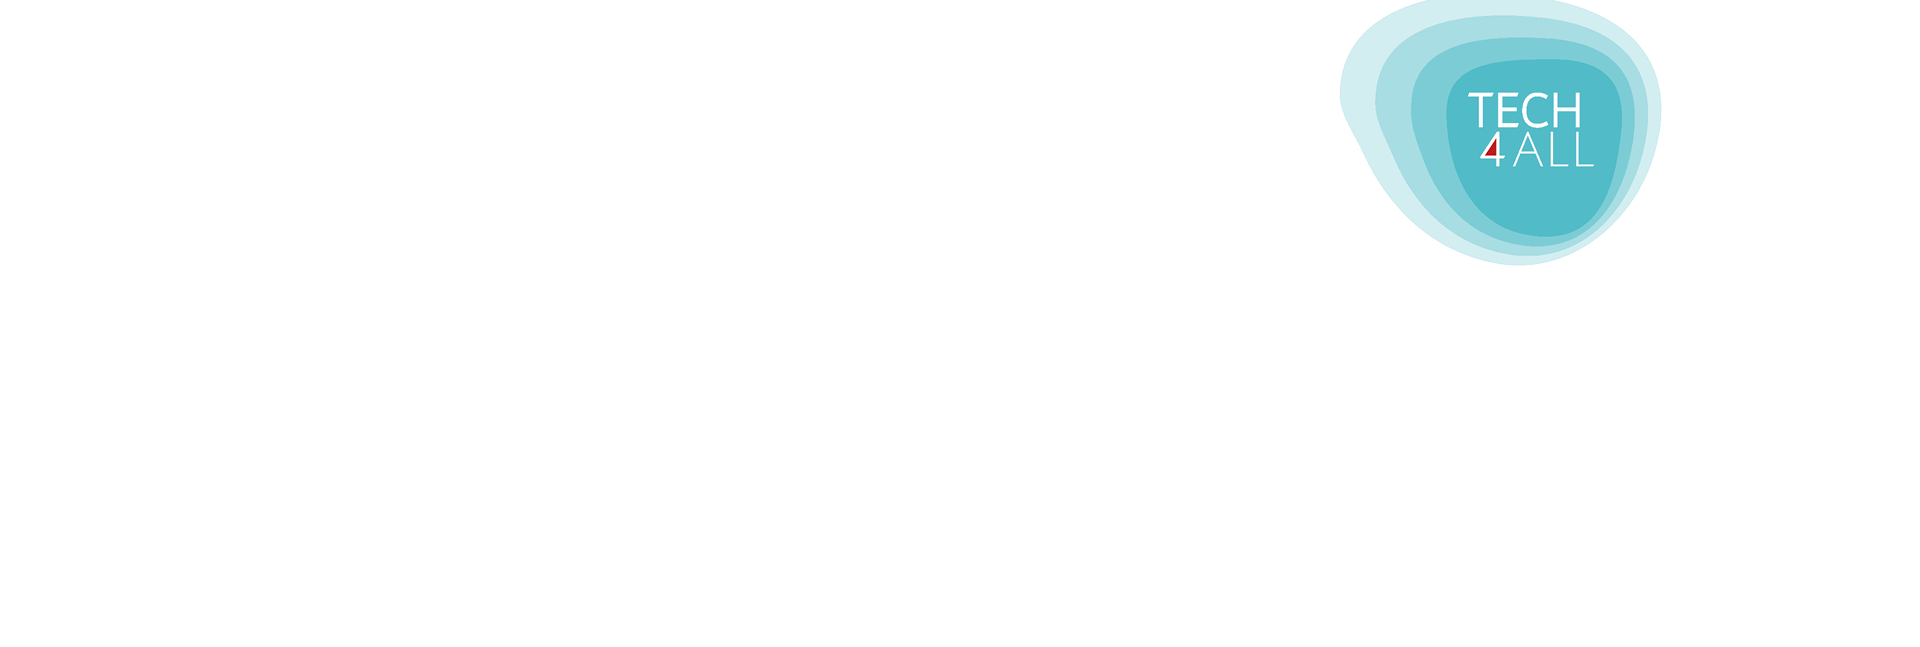 tech4all logo